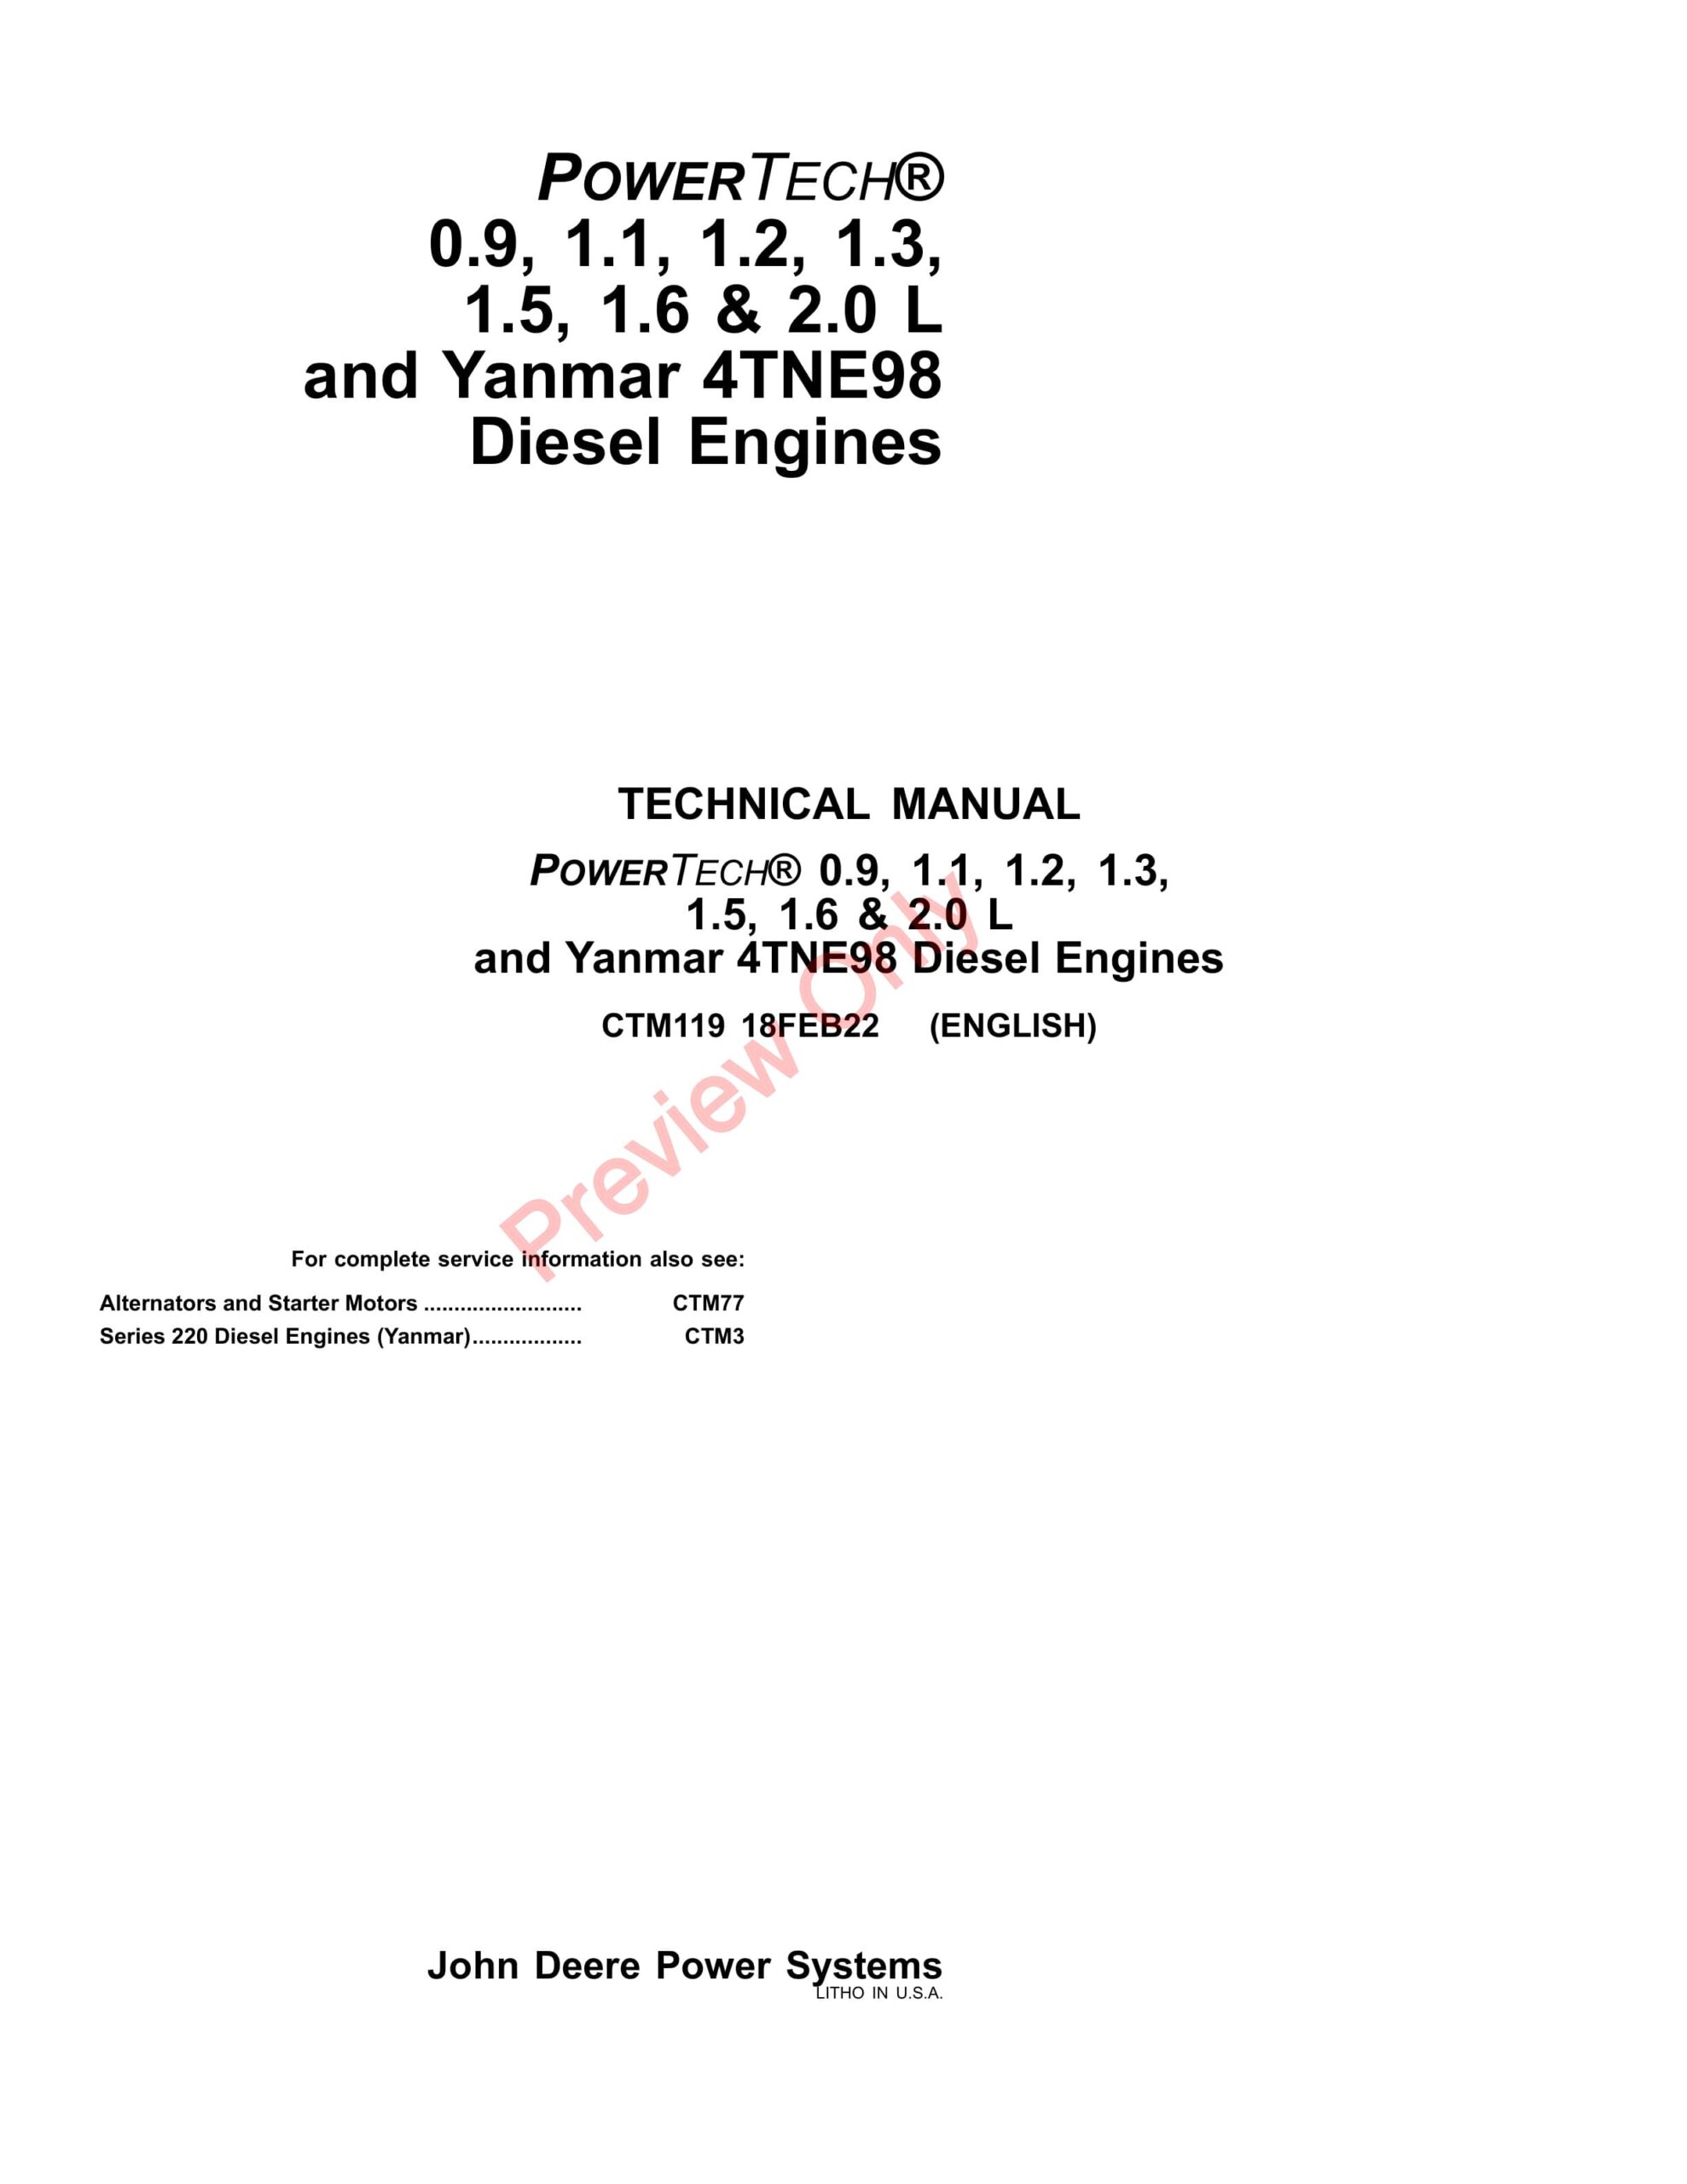 John Deere PowerTech 0.9, 1.1, 1.2, 1.3, 1.5, 1.6, 2.0L and Yanmar 4TNE98 Diesel Engines Service Information CTM119 18FEB22-1